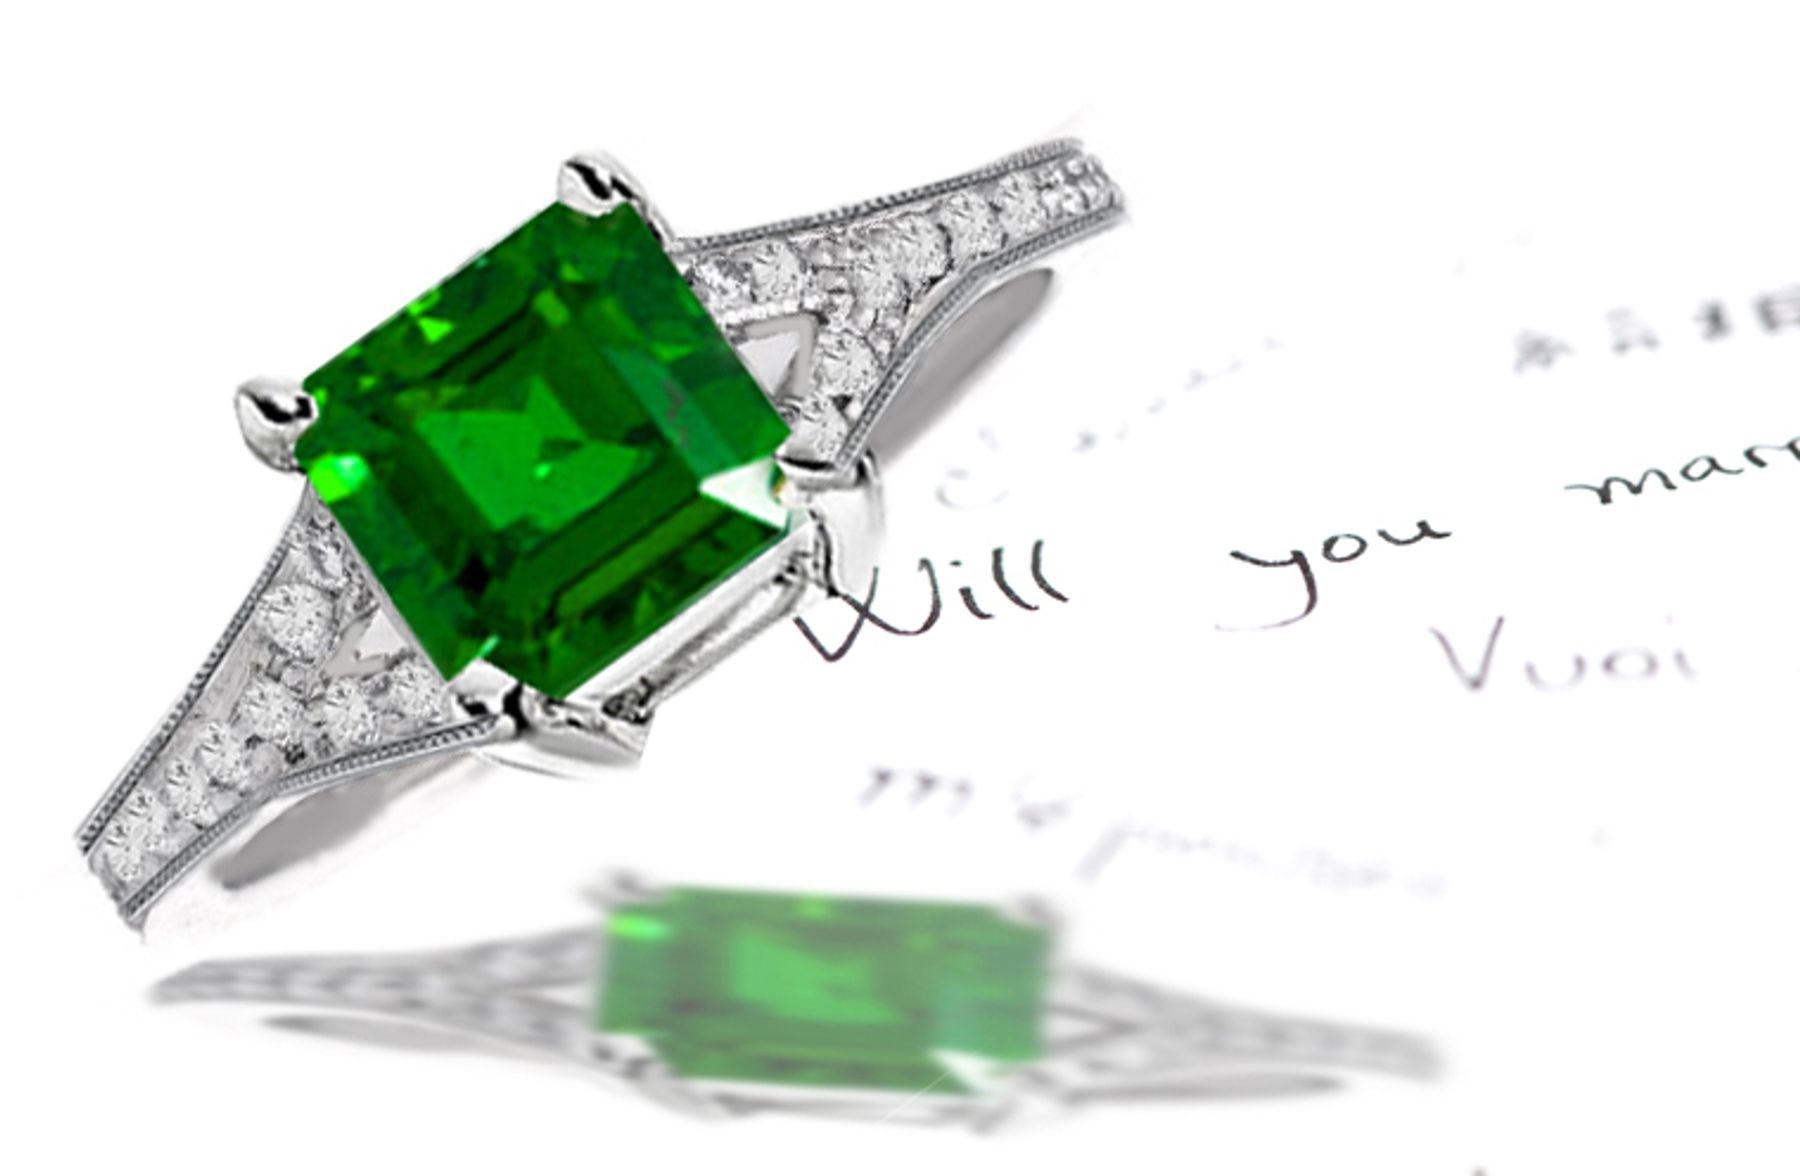 French Style Pave Set Diamond Shank Emerald Princess Cut & Diamond Engagement Ring